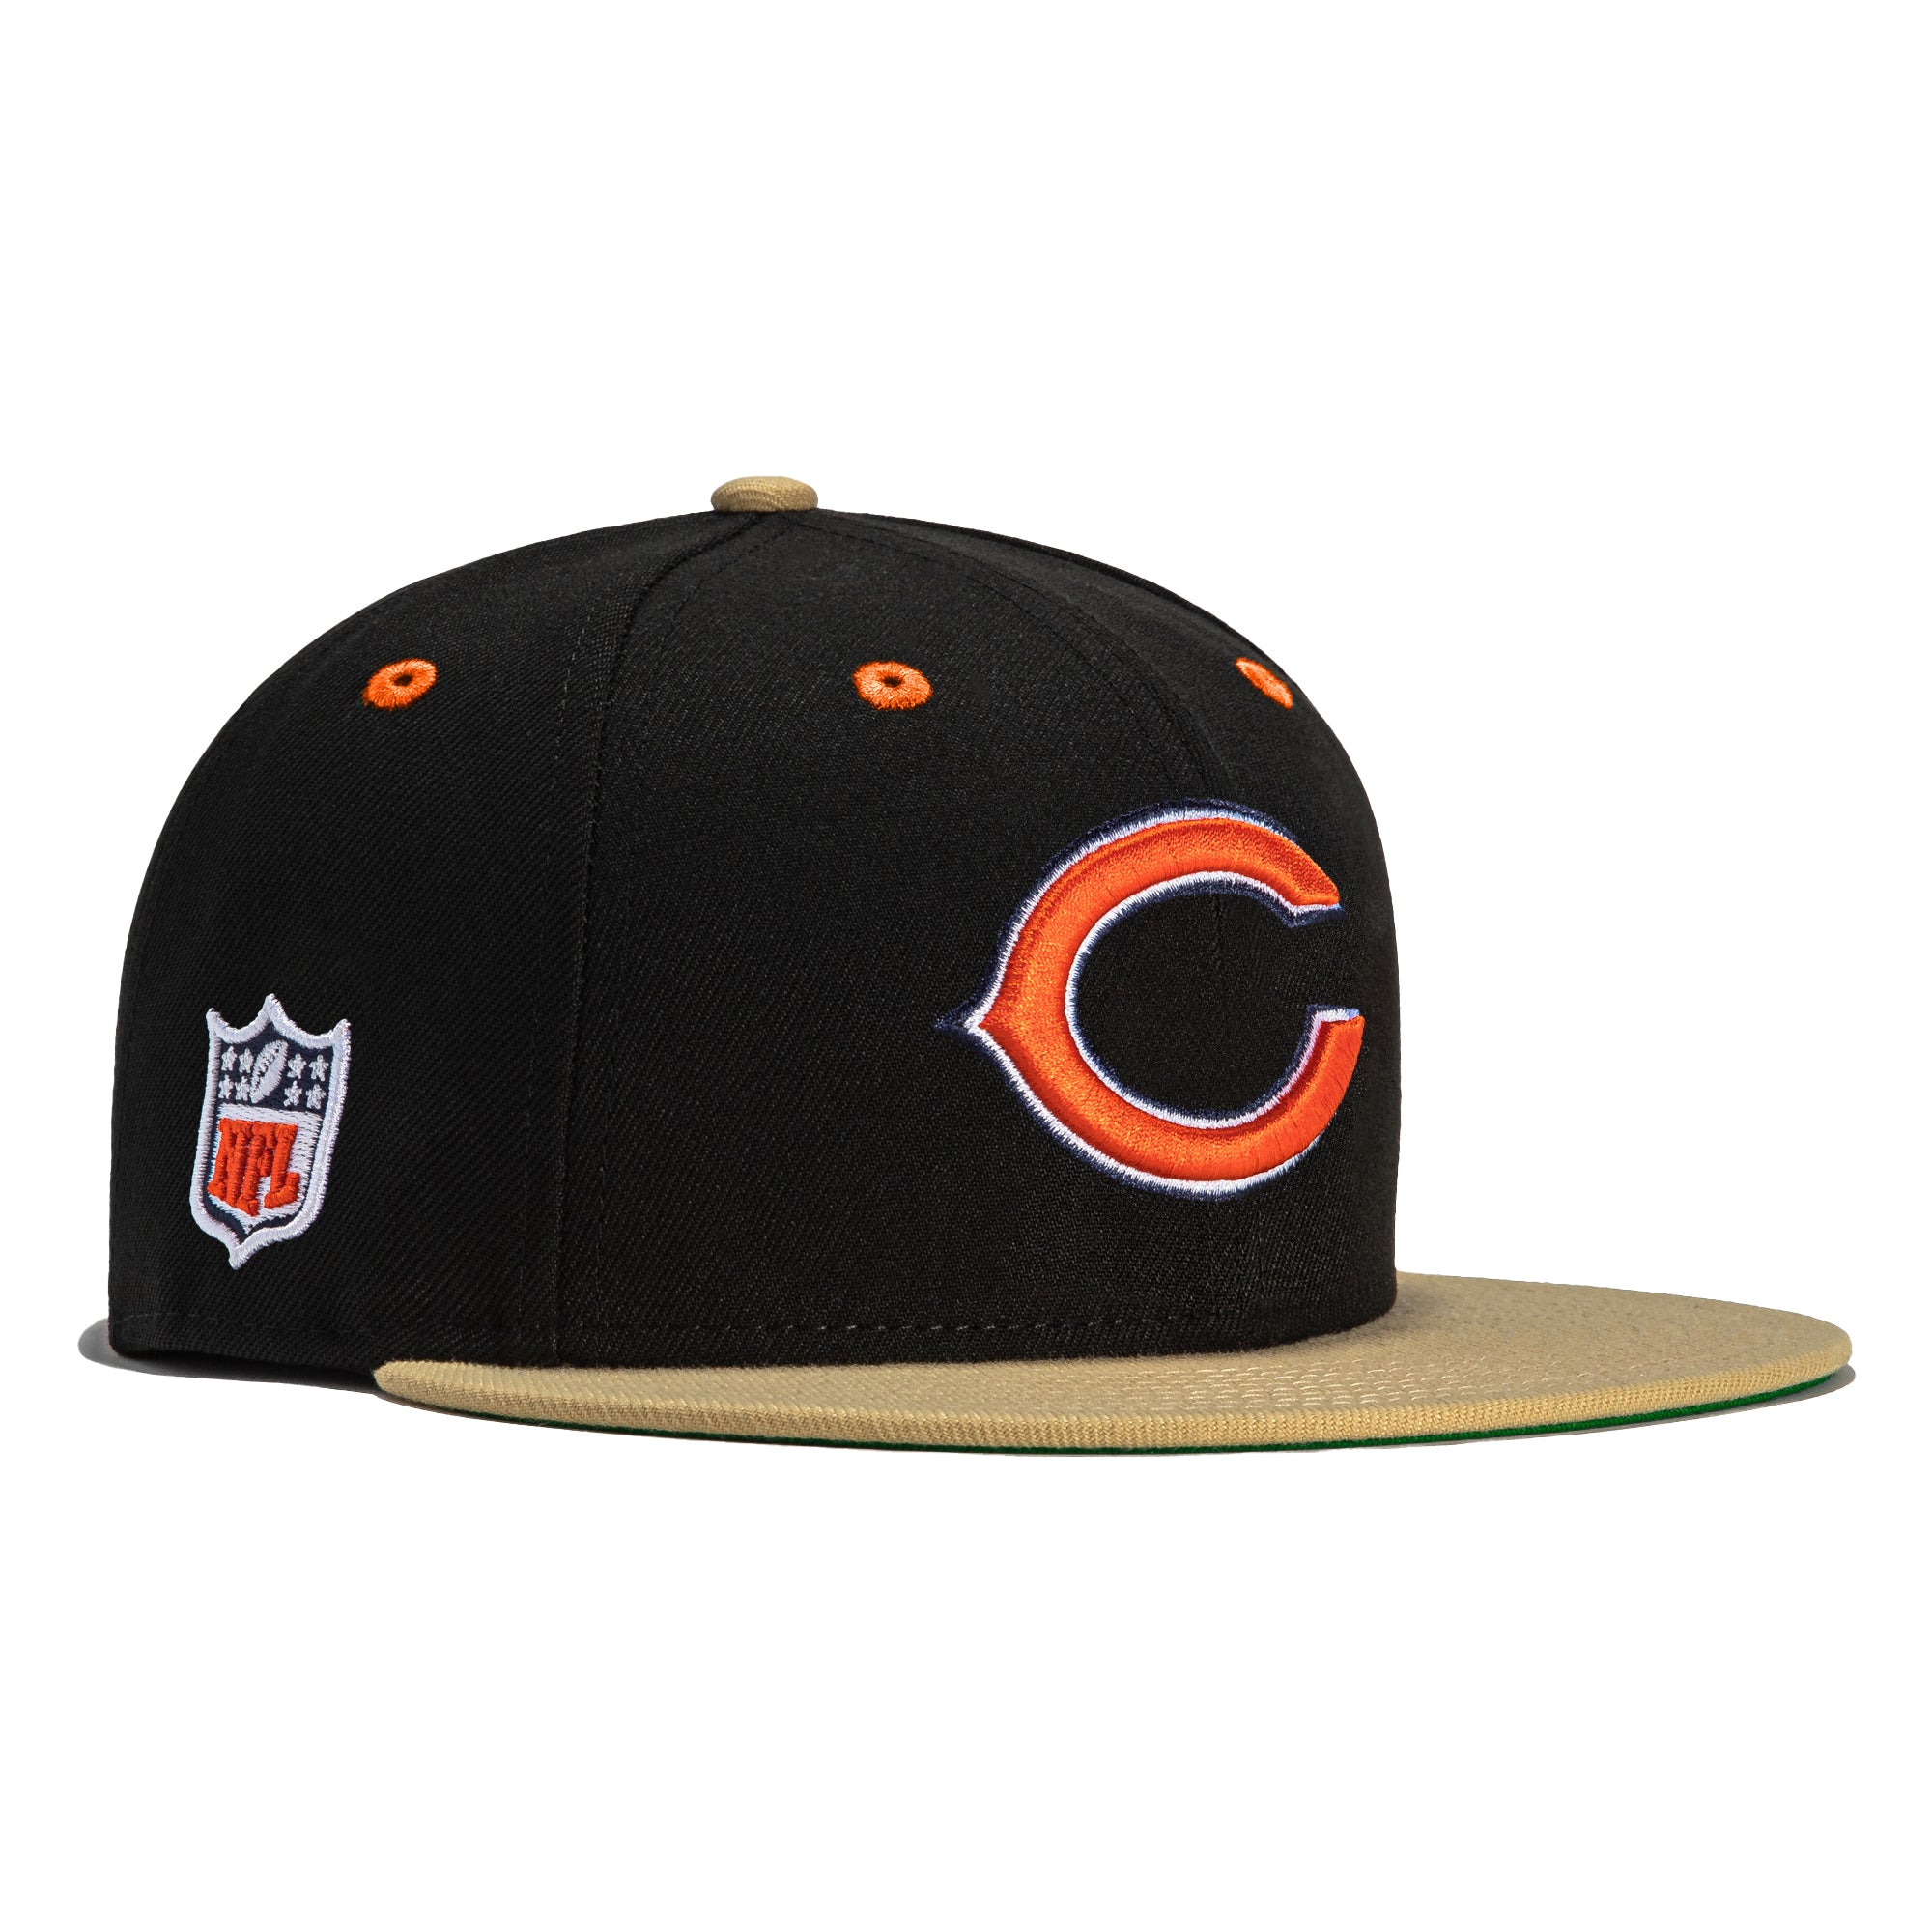 New Era 59FIFTY Big Easy Chicago Bears Hat - Black, Tan Black/Tan / 7 1/4